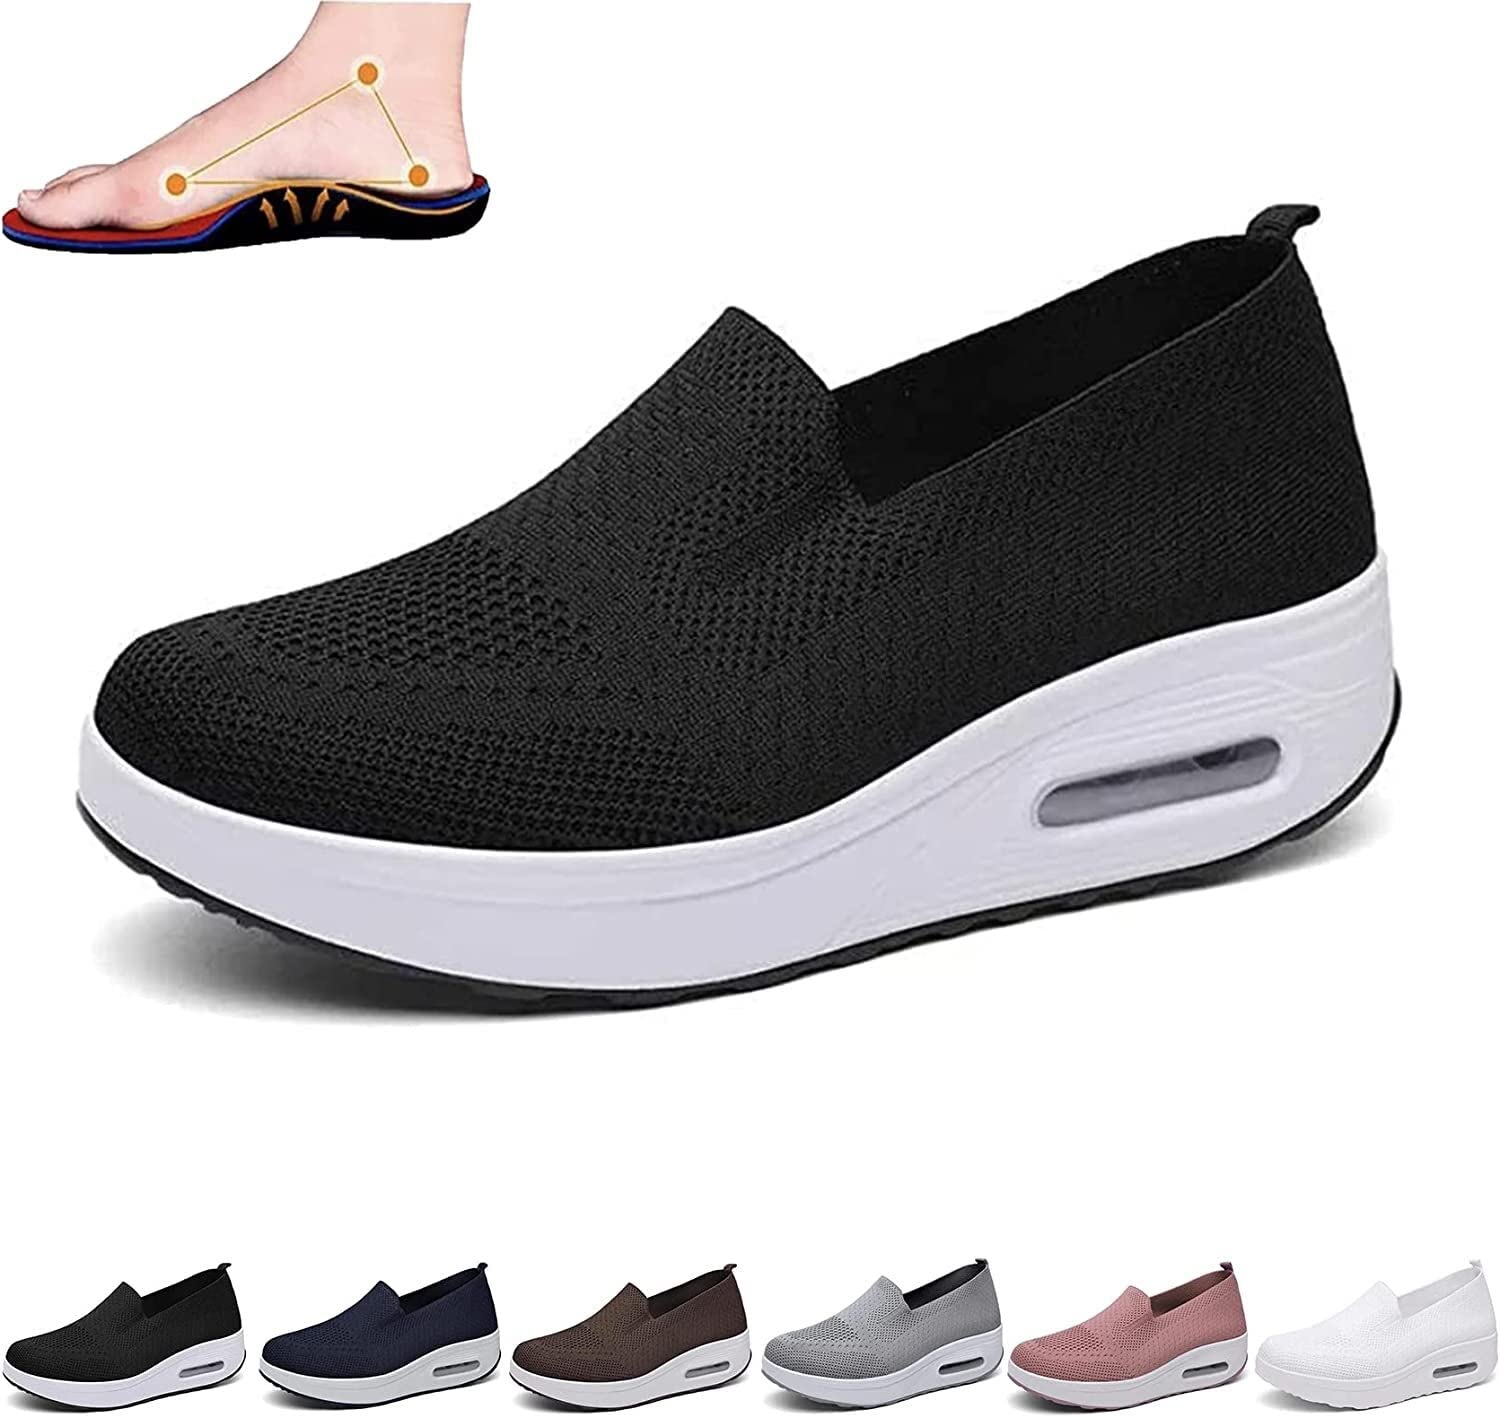 Women's Orthopedic Sneakers,Air Cushion Slip-On Walking Shoes, Mesh Stretch Platform Sneakers, Comfortable Casual Fashion Sneaker Walking Shoes (Color : Black, Size : 5.5)